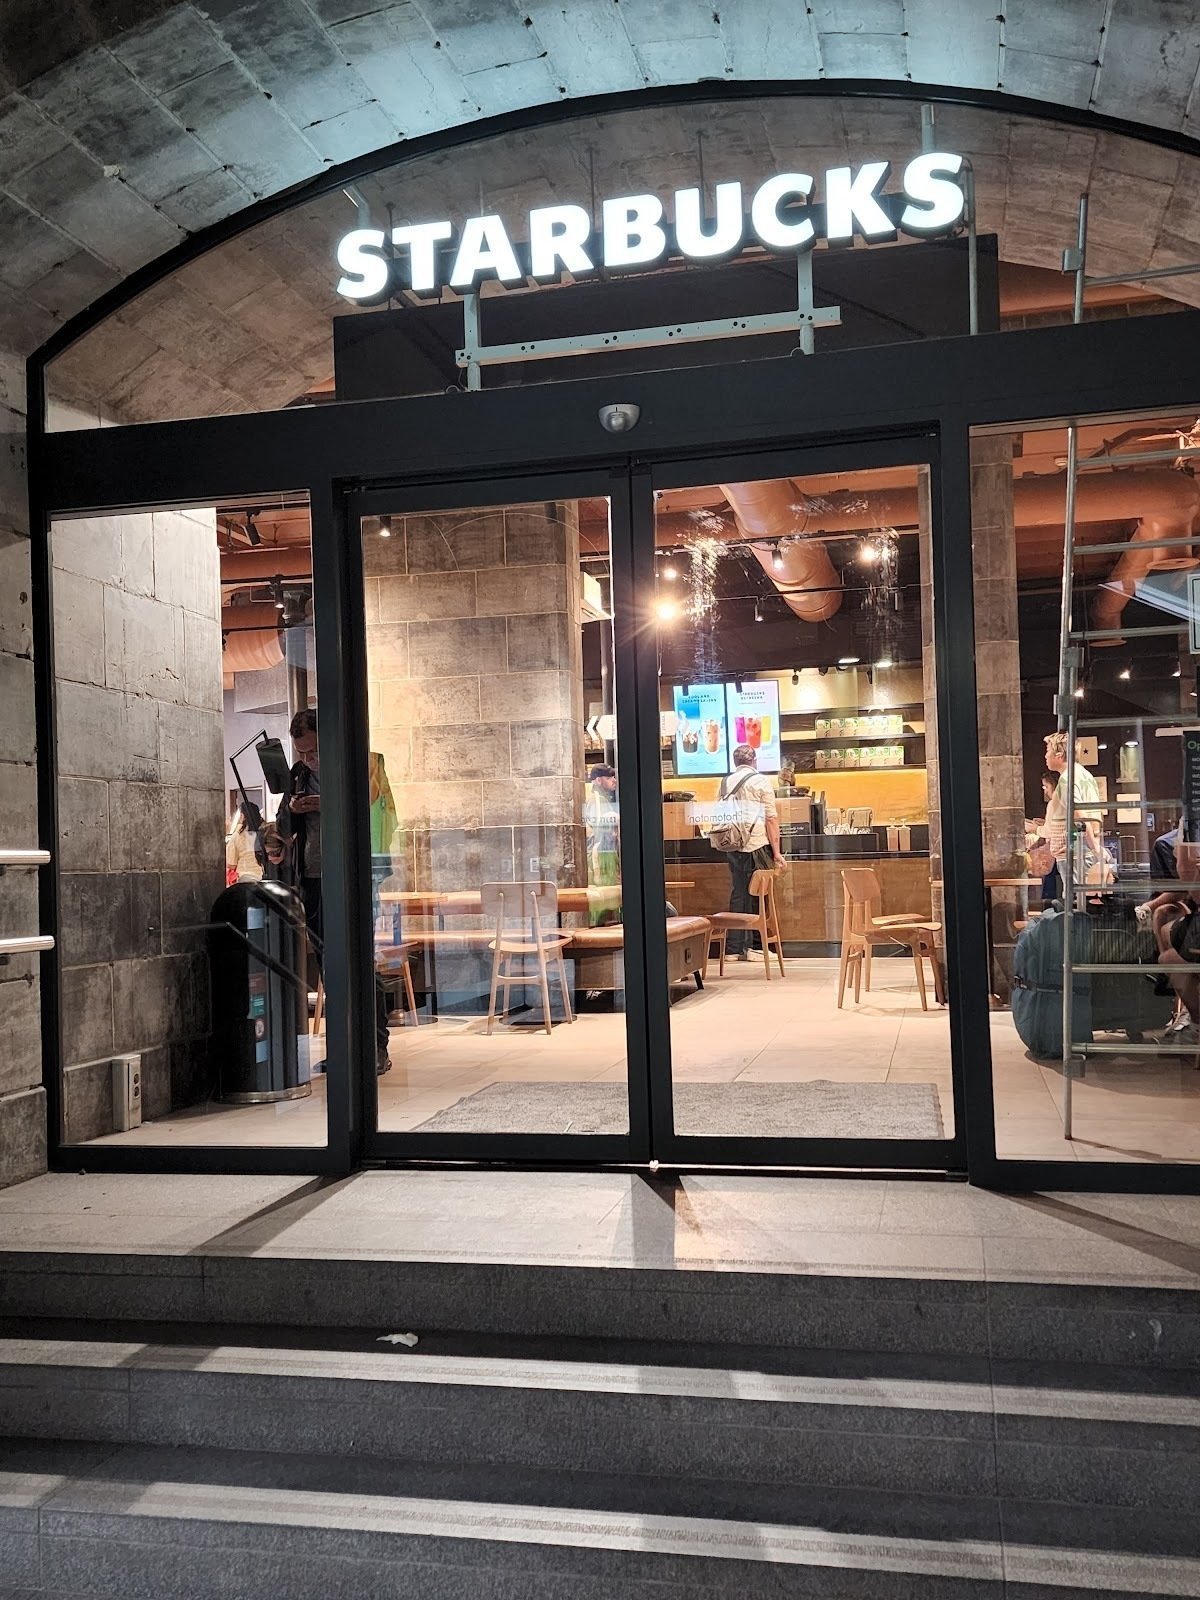 <span class="translation_missing" title="translation missing: en.meta.location_title, location_name: Starbucks @ Koningin Astridplein, city: Antwerp">Location Title</span>